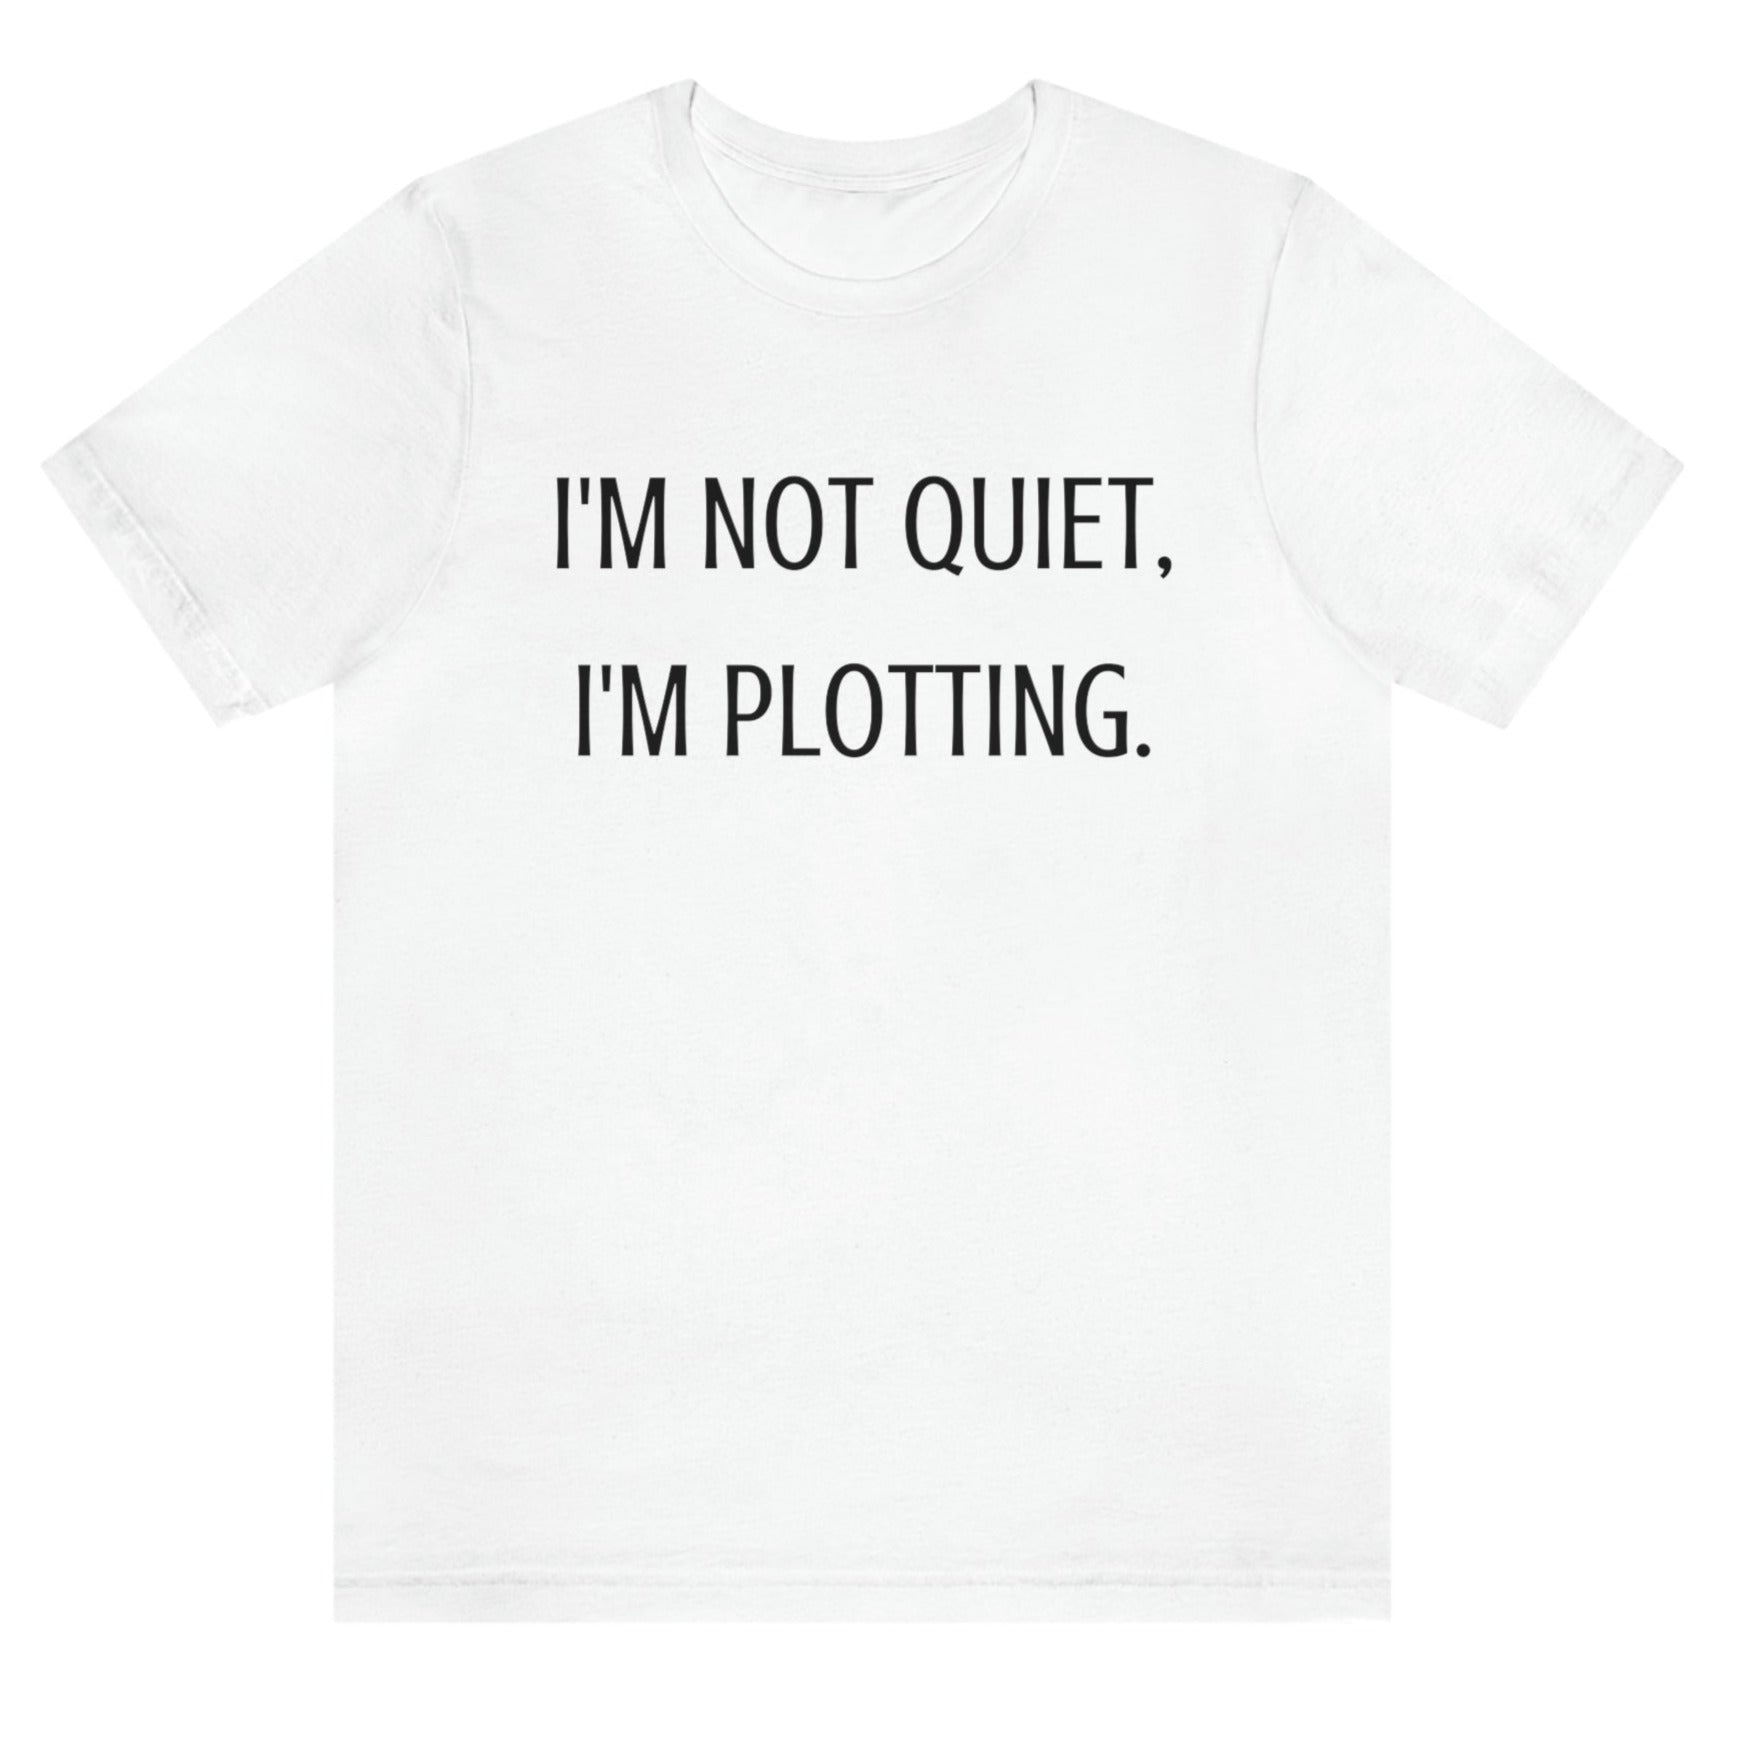 im-not-quiet-im-plotting-white-t-shirt-funny-humor